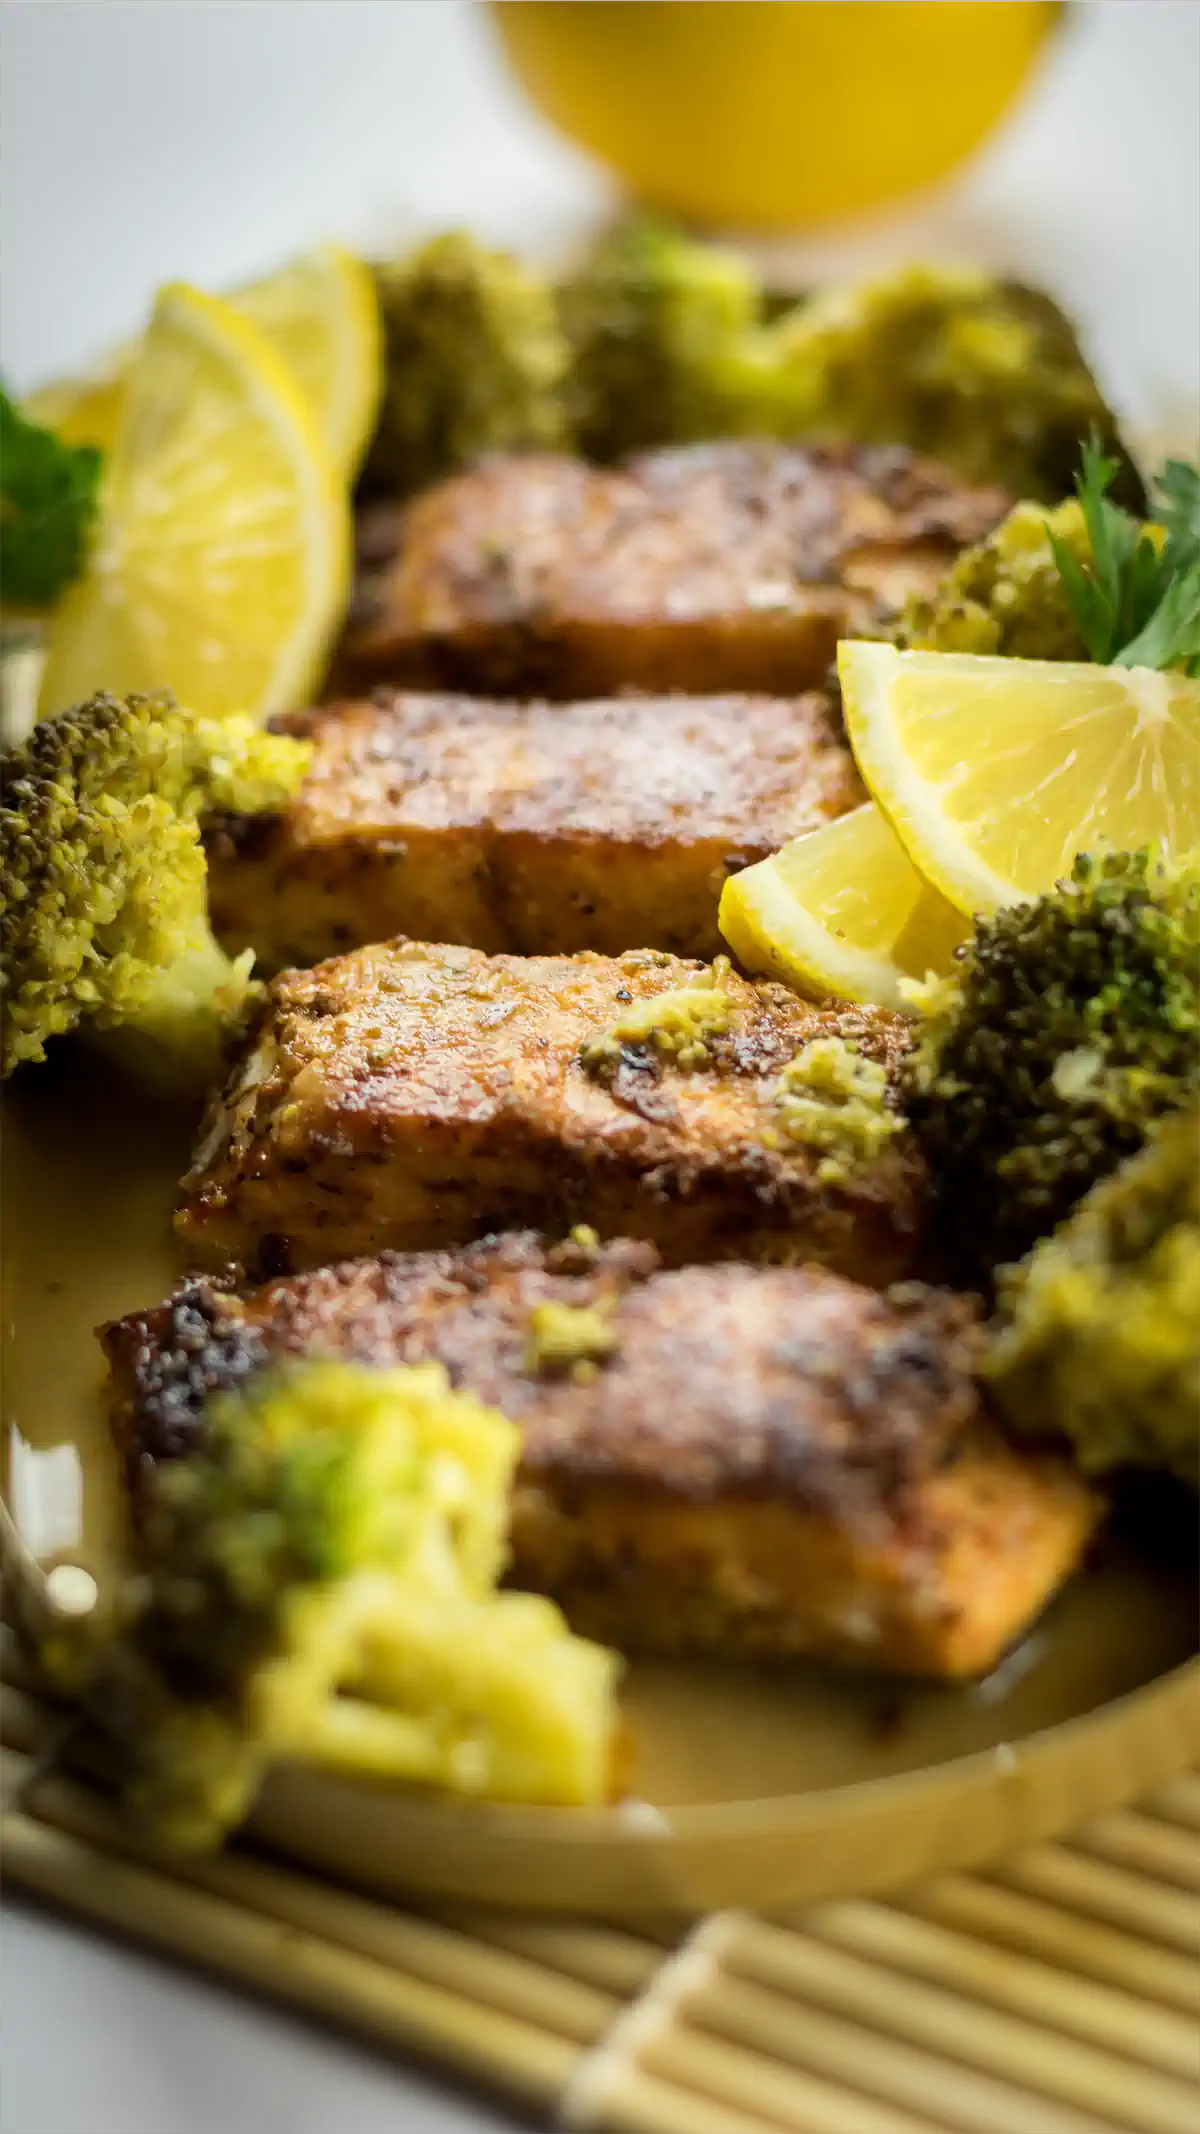 Blackened salmon in lemony butter sauce served alongside broccoli and lemon slices.